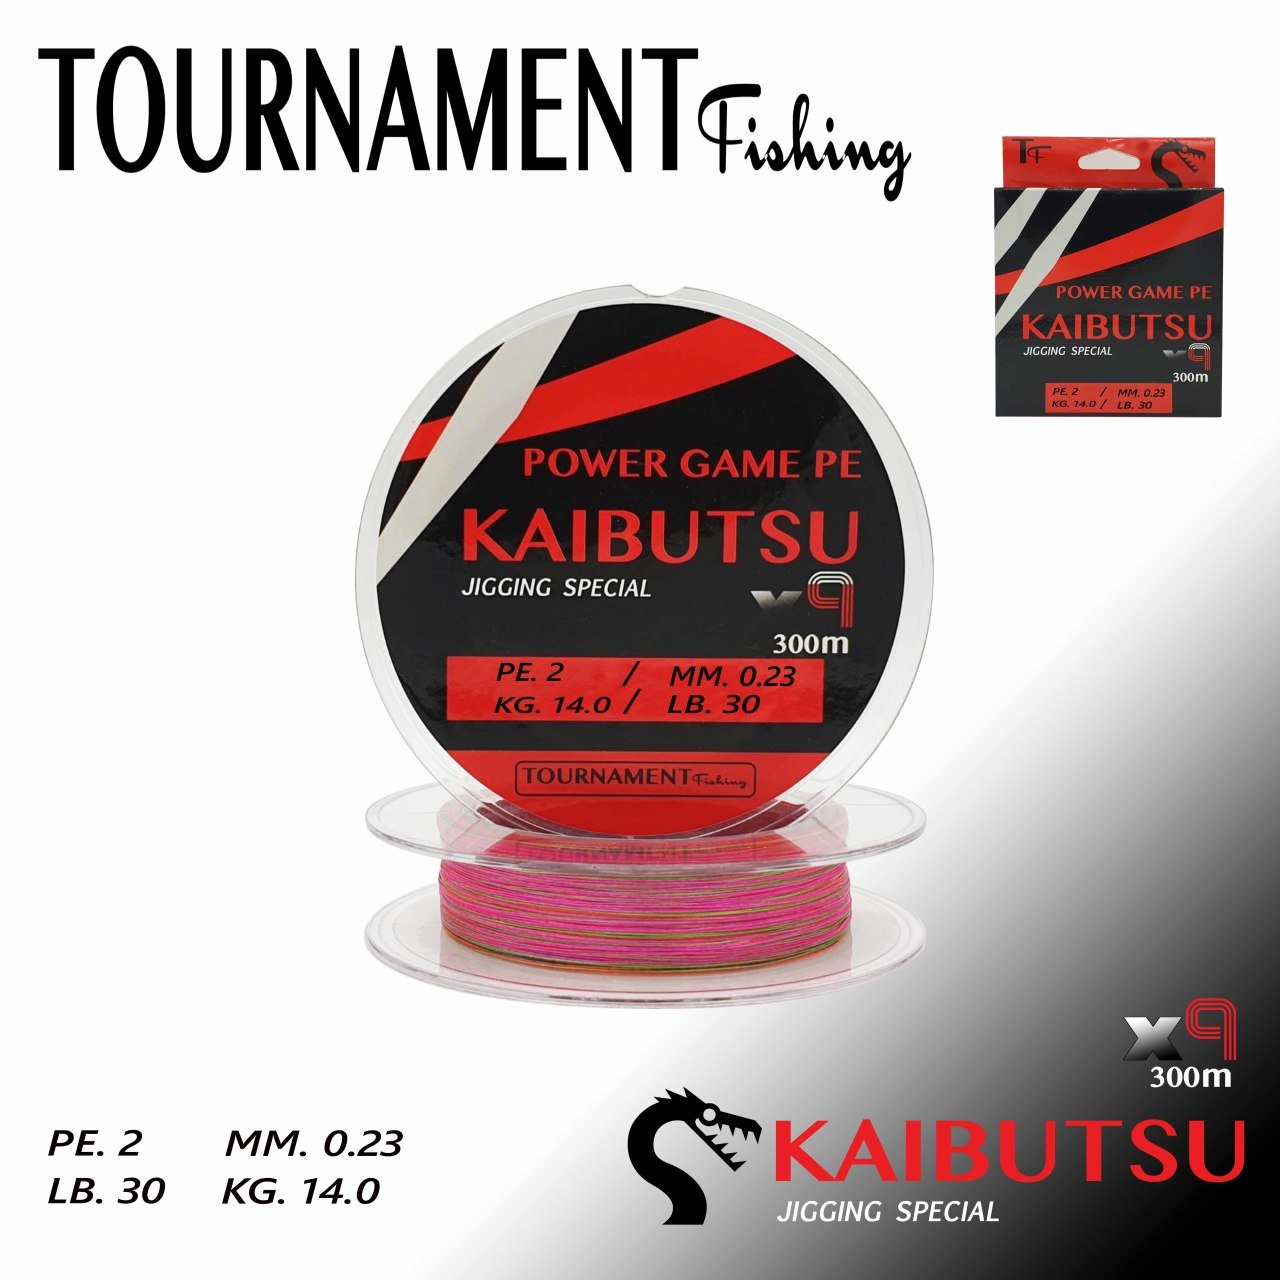 TOURNAMENT fishing Power game pe KAIBUTSU Jigging Special X9 PE. 2 /MM0.23 KG14.0/LB.30